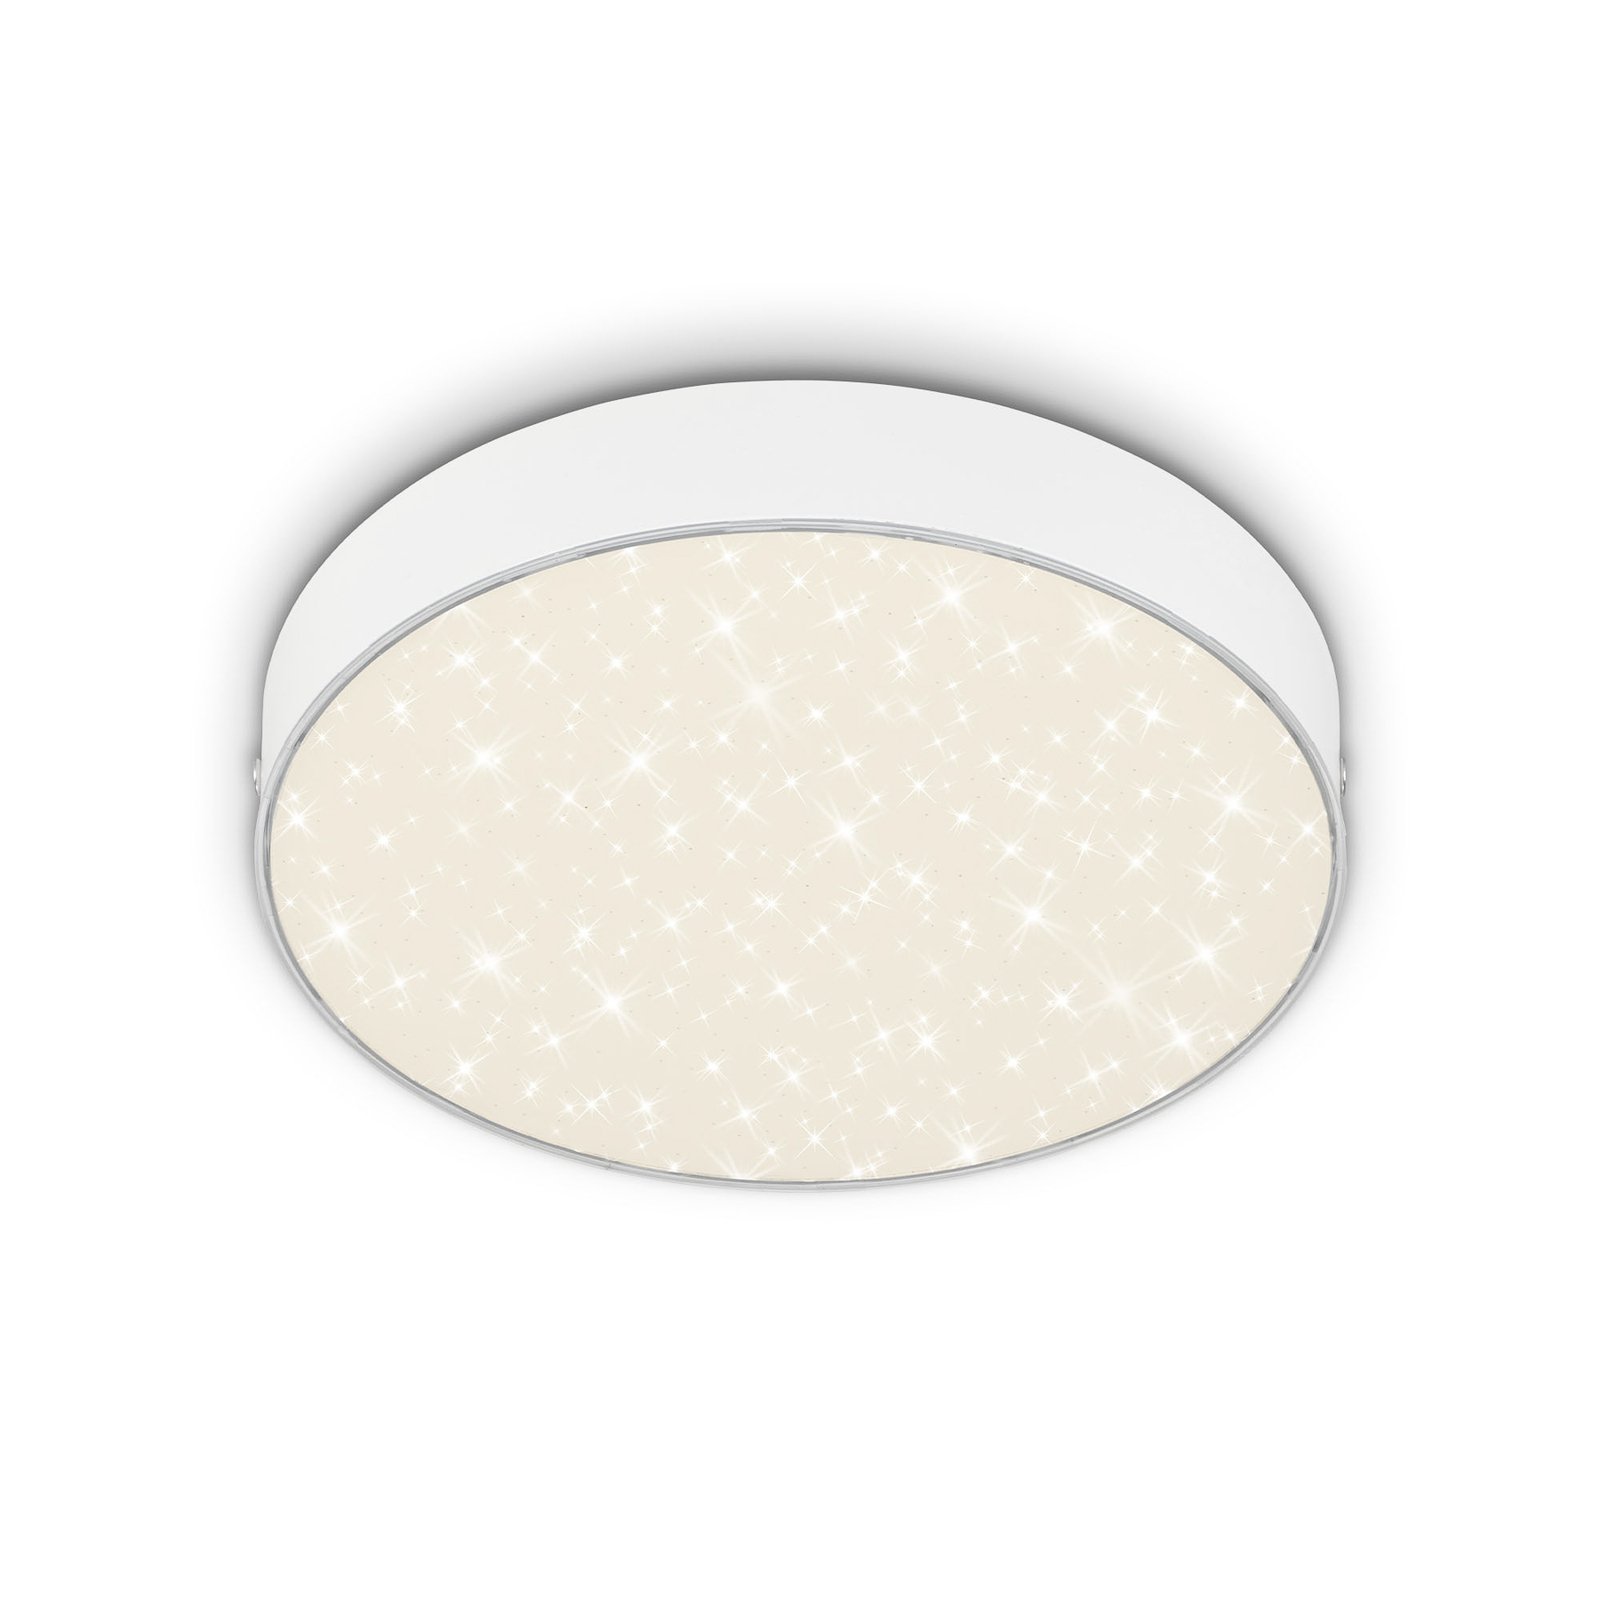 Lampa sufitowa LED Flame Star, Ø 21,2 cm biała